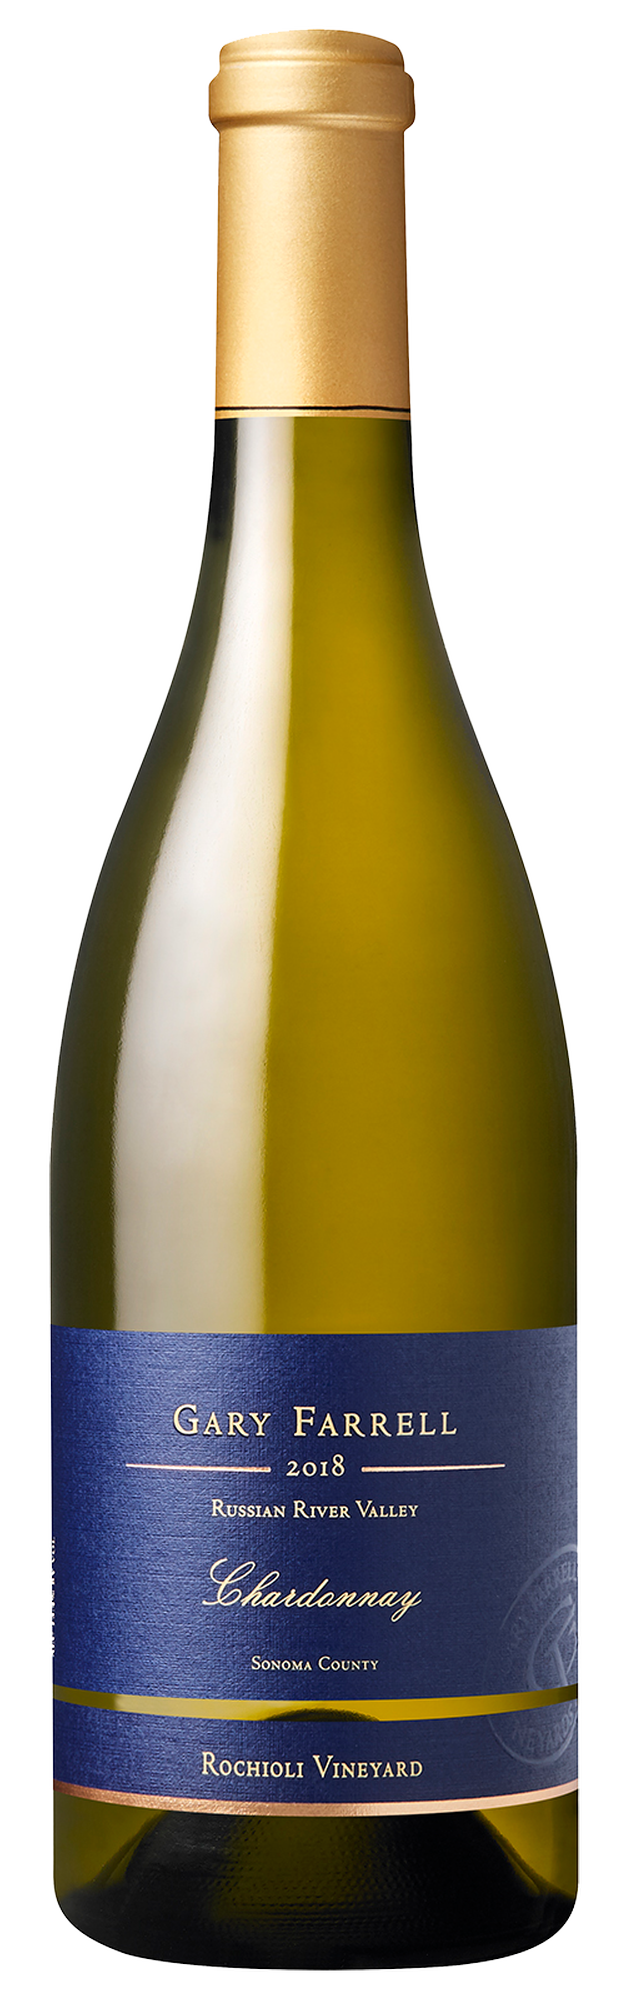 2018 Rochioli Vineyard Chardonnay